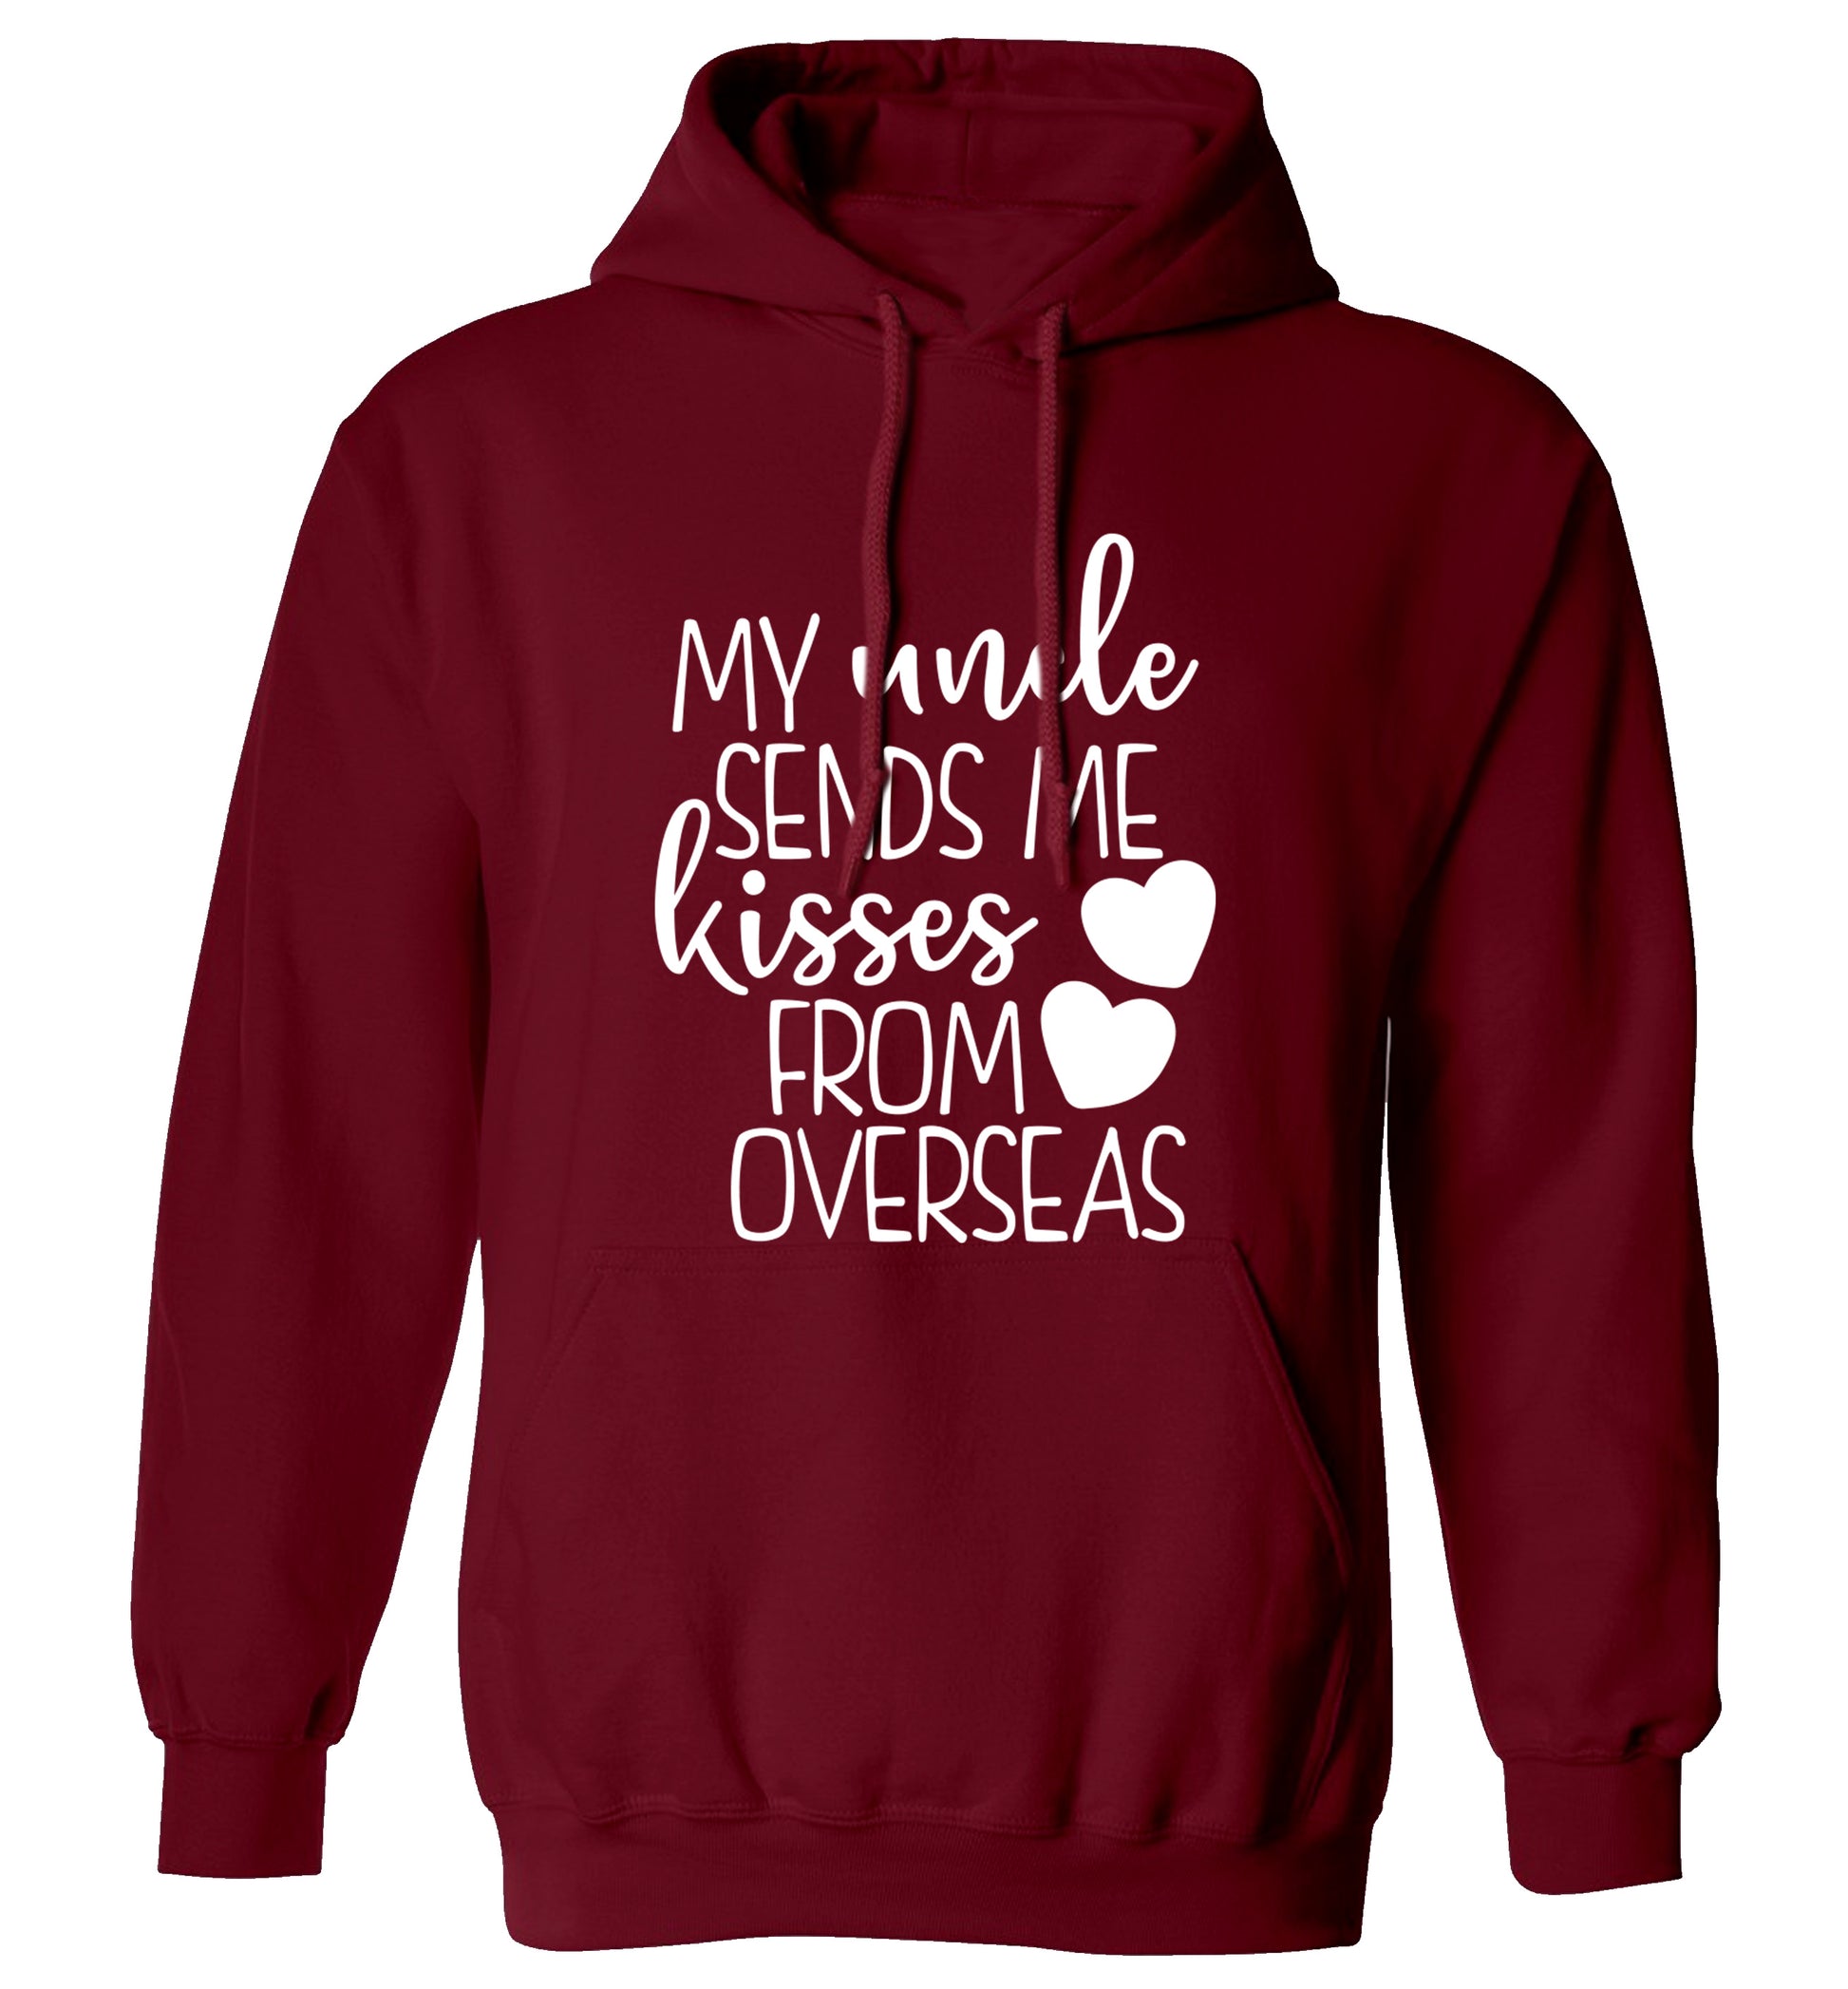 My uncle sends me kisses from overseas adults unisex maroon hoodie 2XL